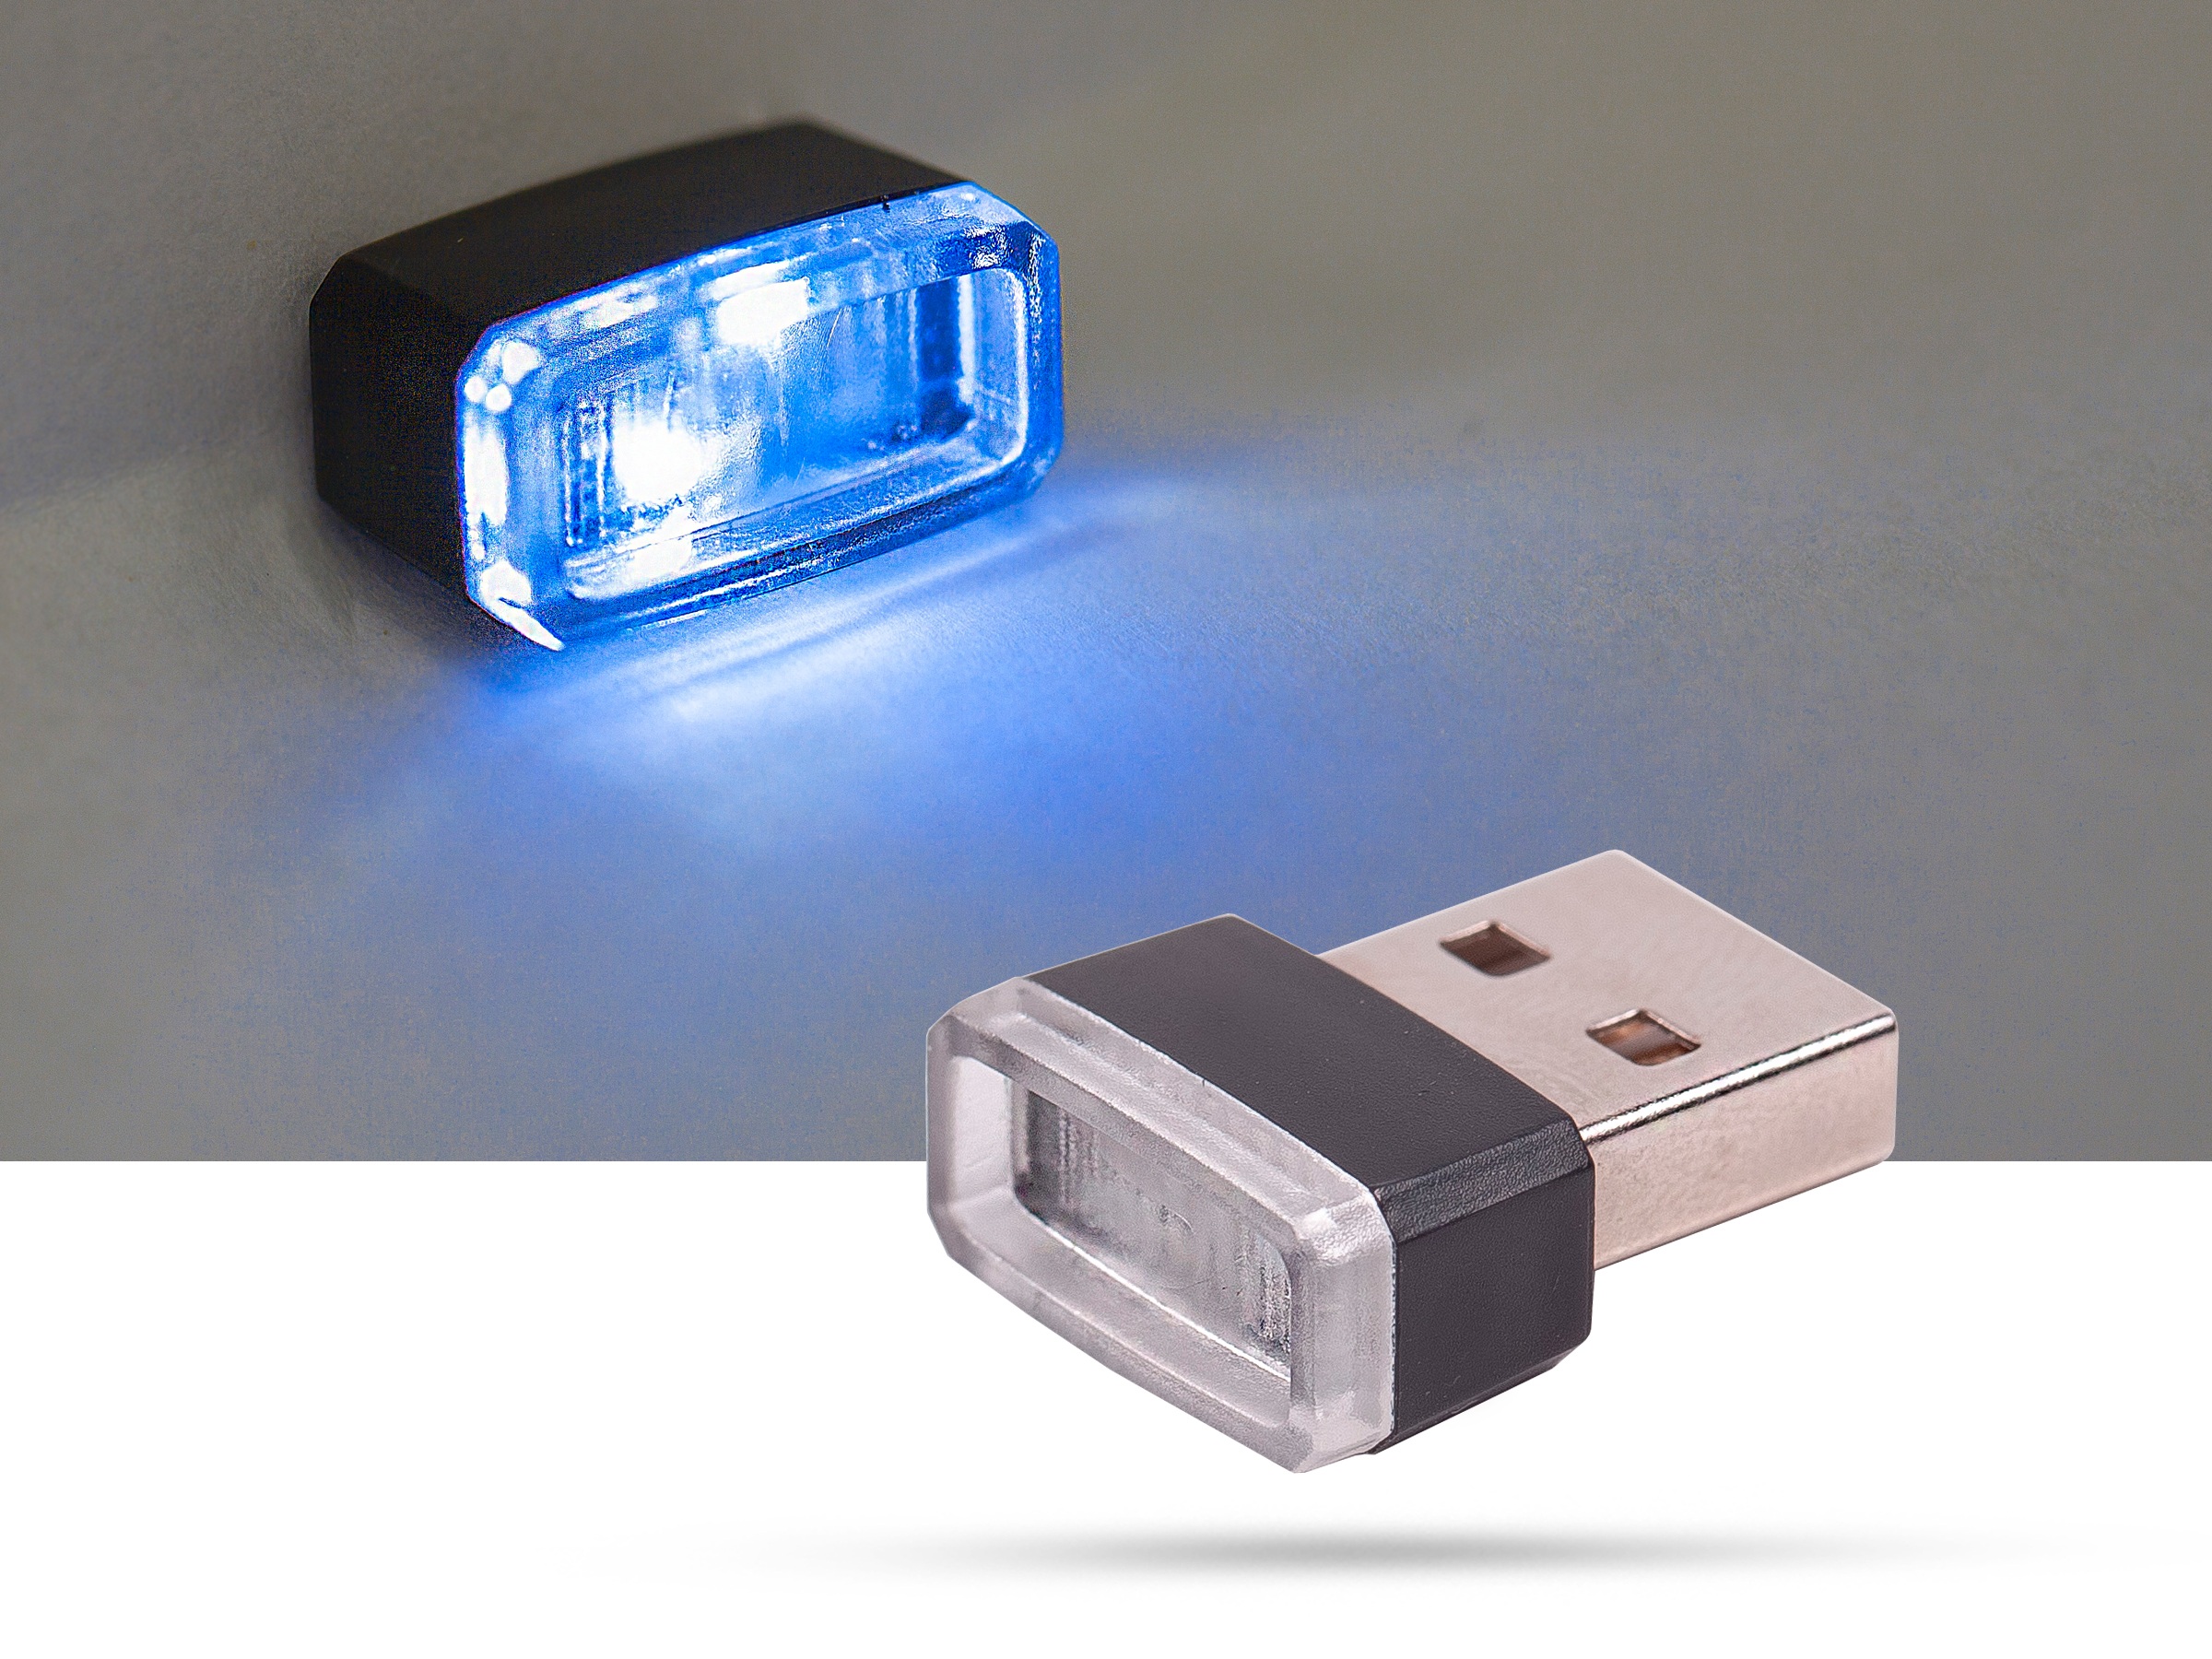 USB-Ambiente Stick, LED Zubehör